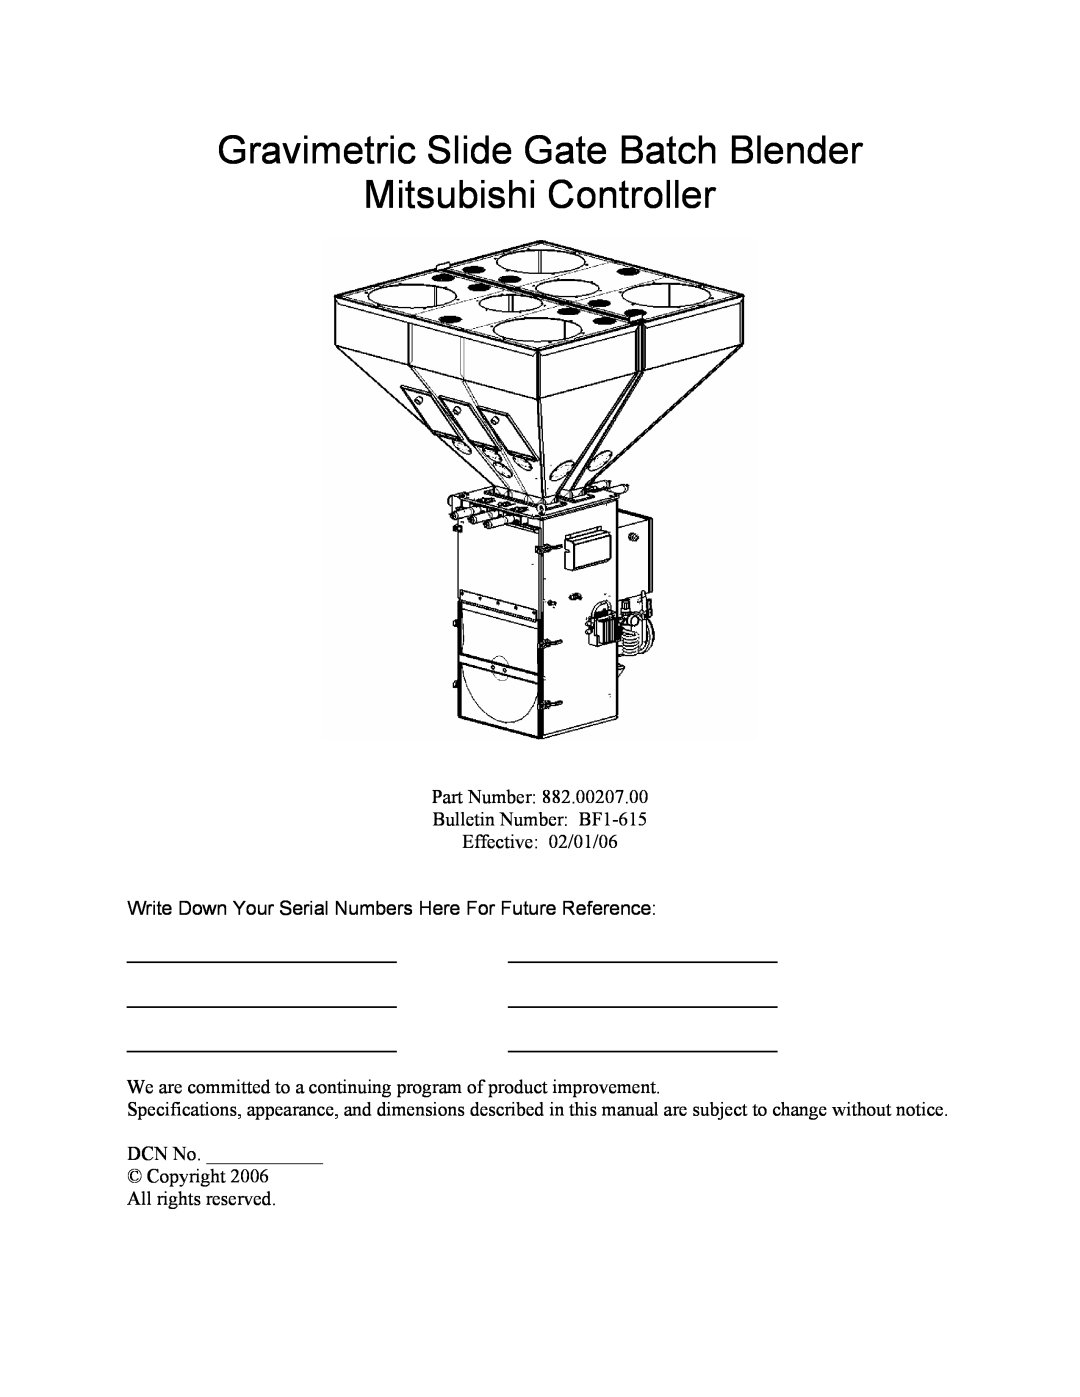 Mitsubishi Electronics 882.00207.00 specifications Gravimetric Slide Gate Batch Blender, Mitsubishi Controller 